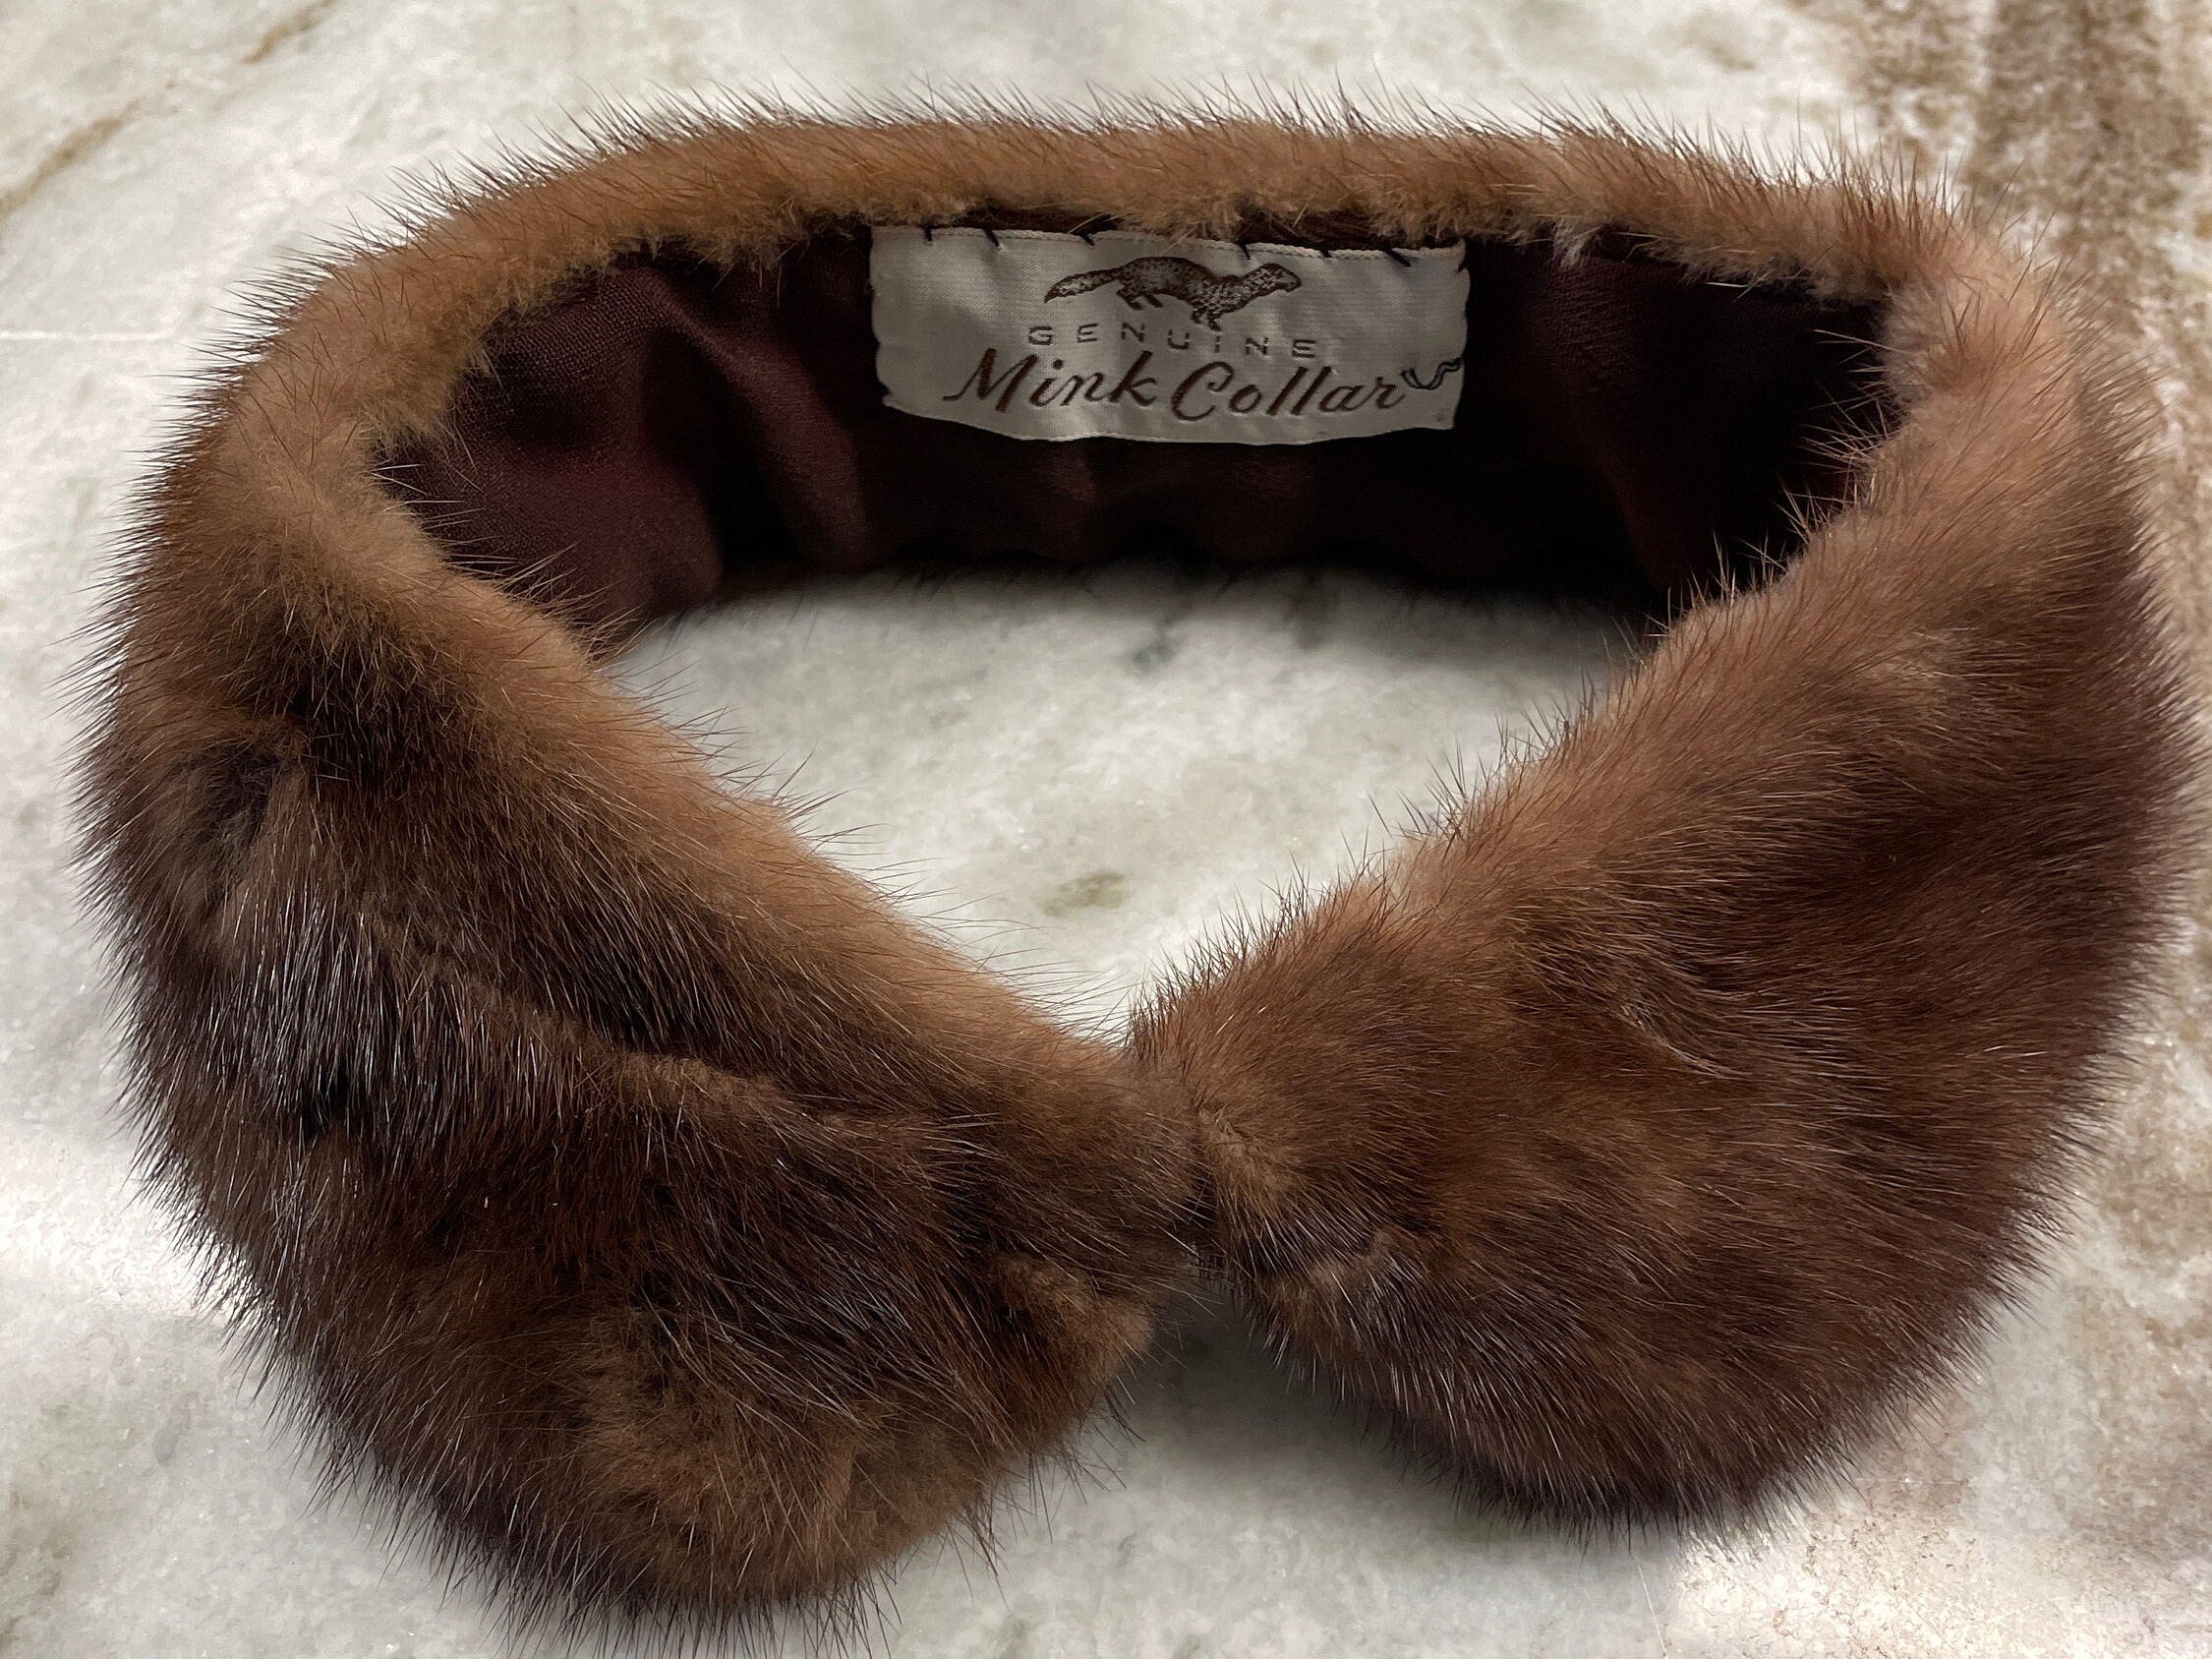 1950s Clothing Natural Light Brown Mink Fur Scarf Collar